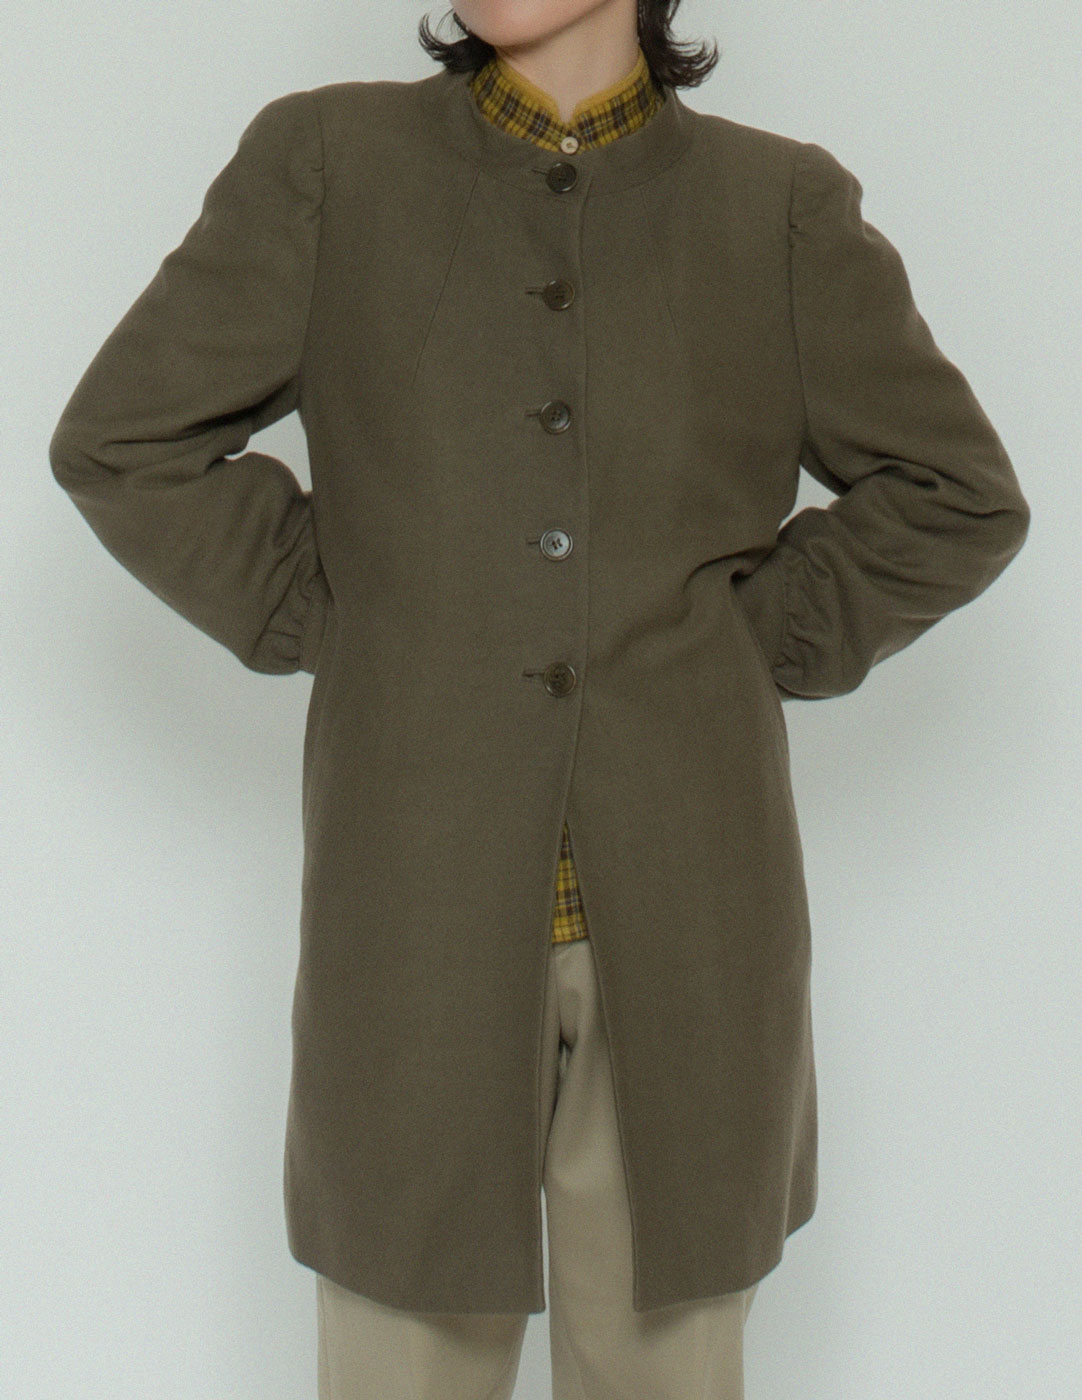 Dries Van Noten olive cotton wool jacket front detail